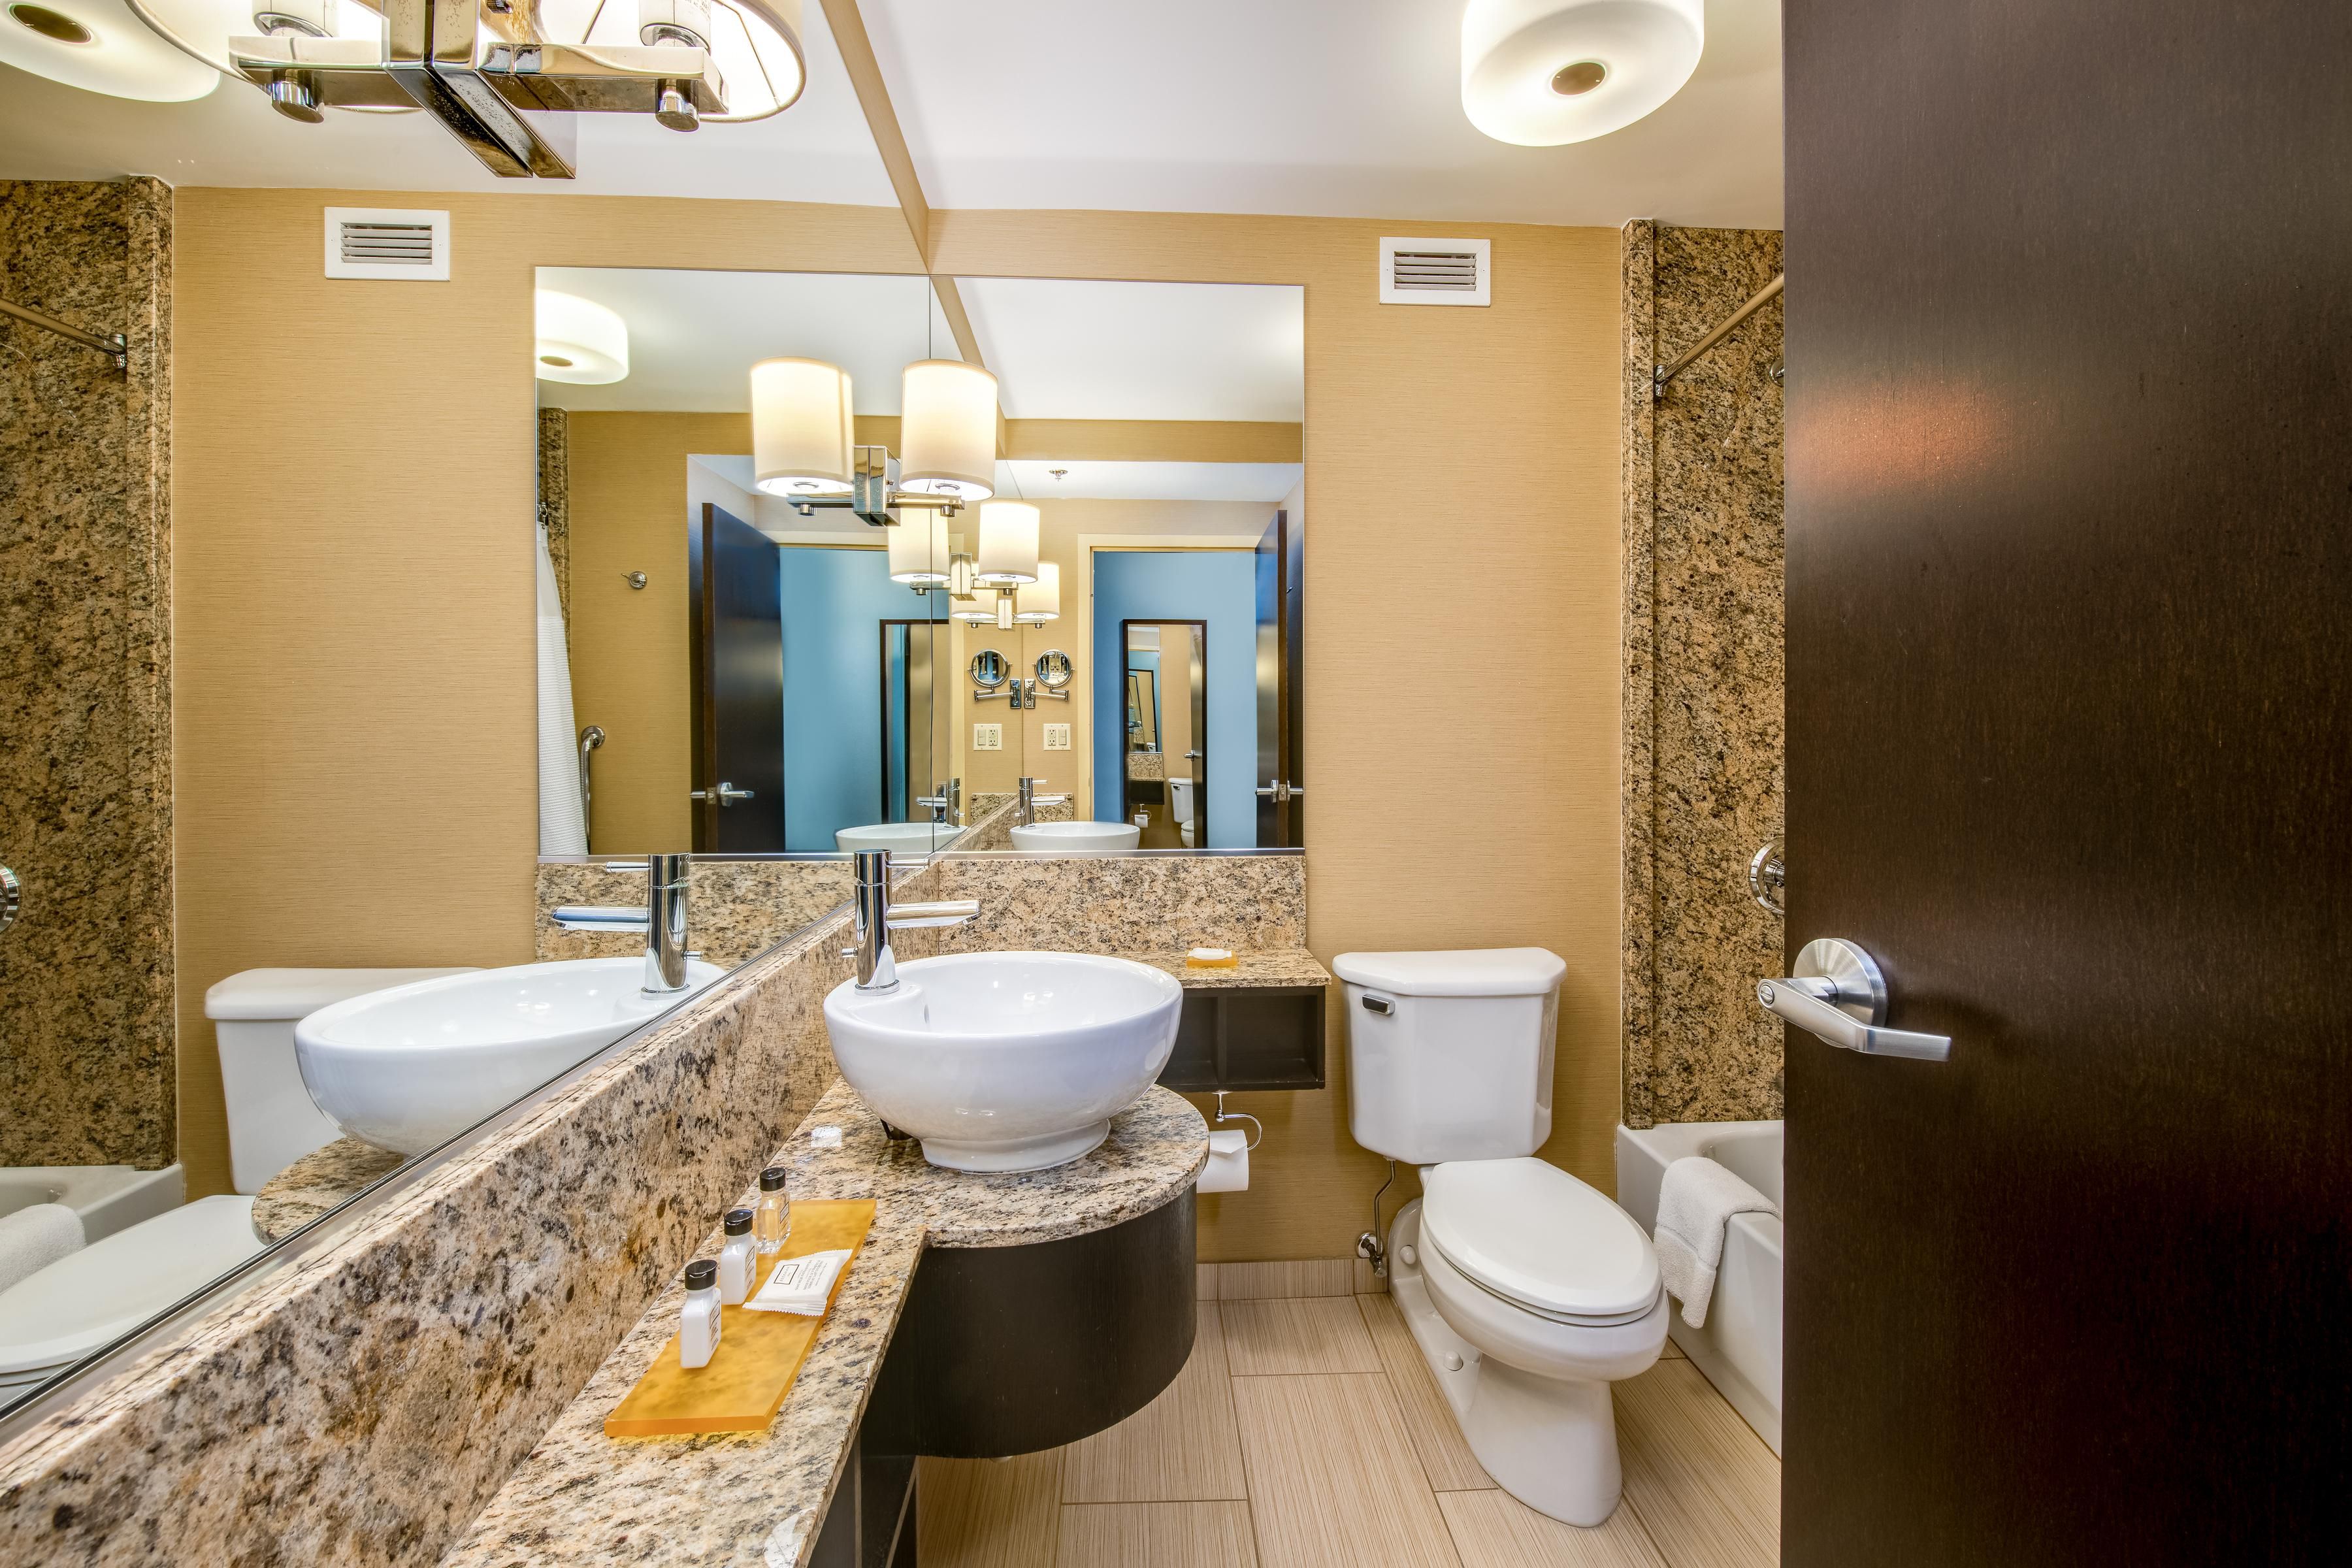 Guest room bathroom with modern amenities